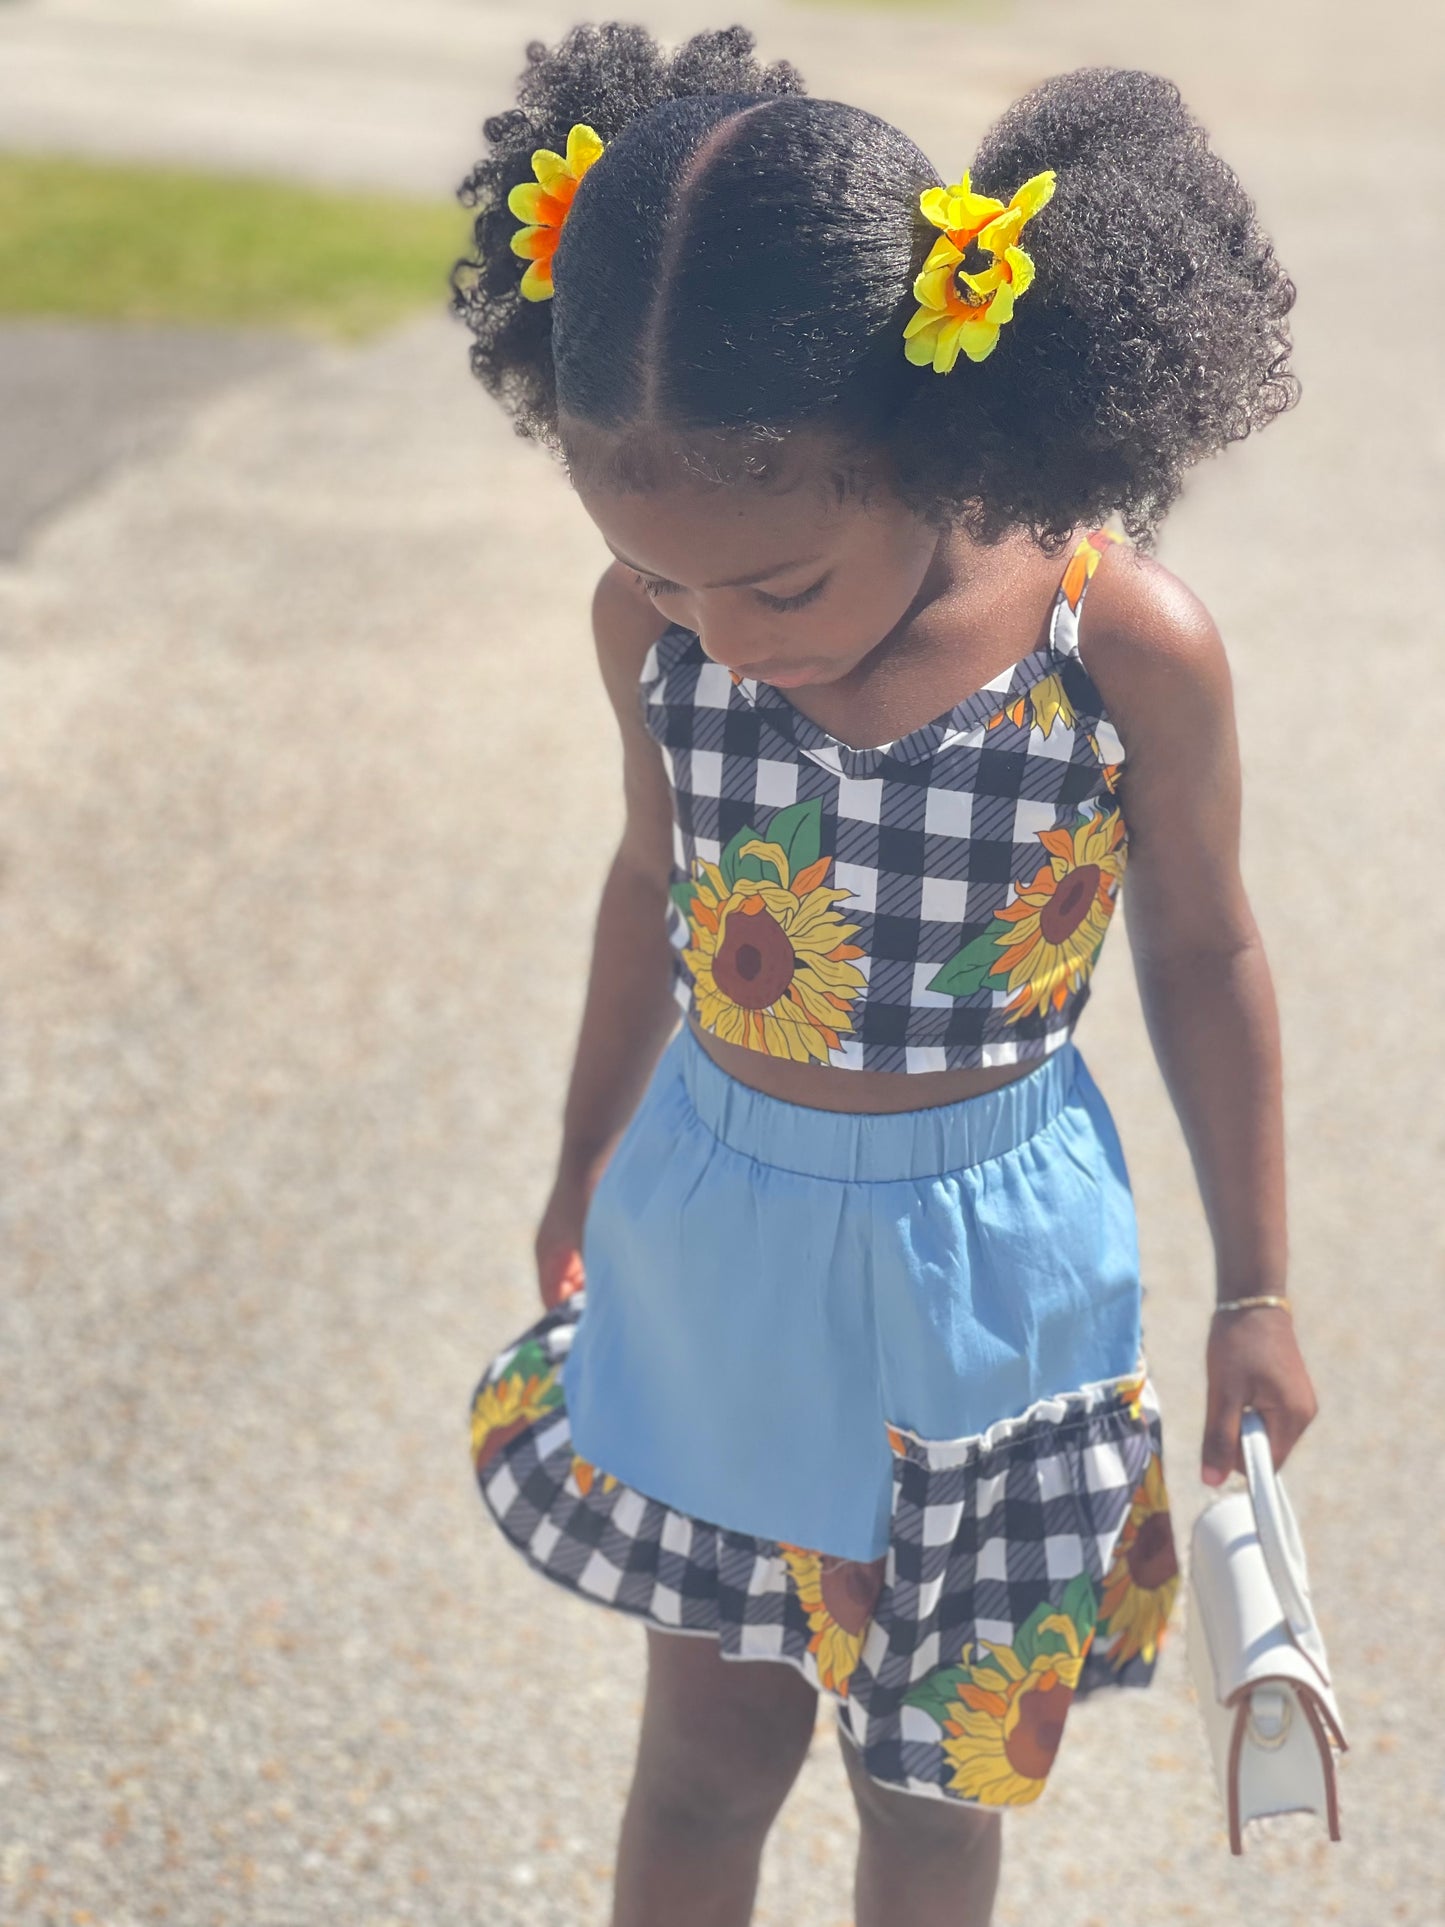 Plaid Sunflower Skirt Set